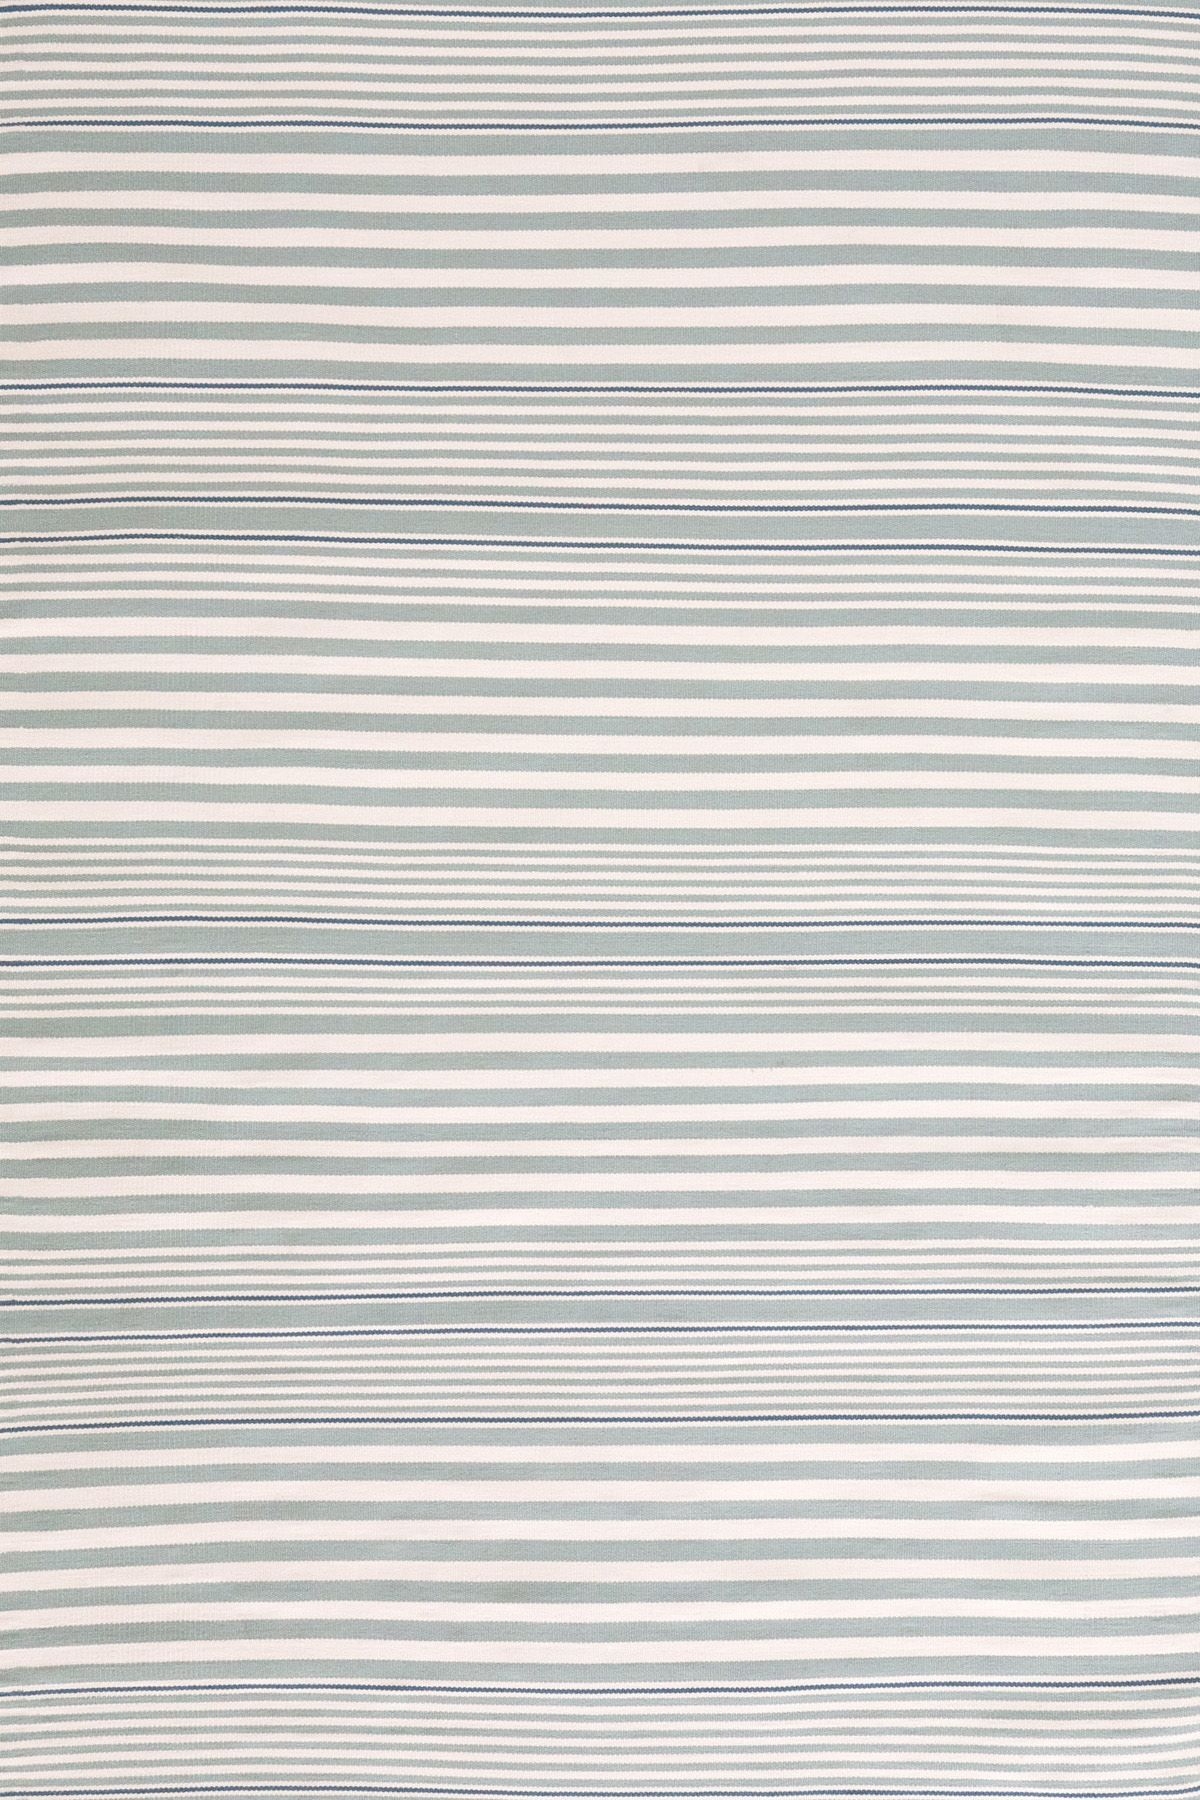 Rugby Stripe Rug, 8'5 x 11' - Image 0